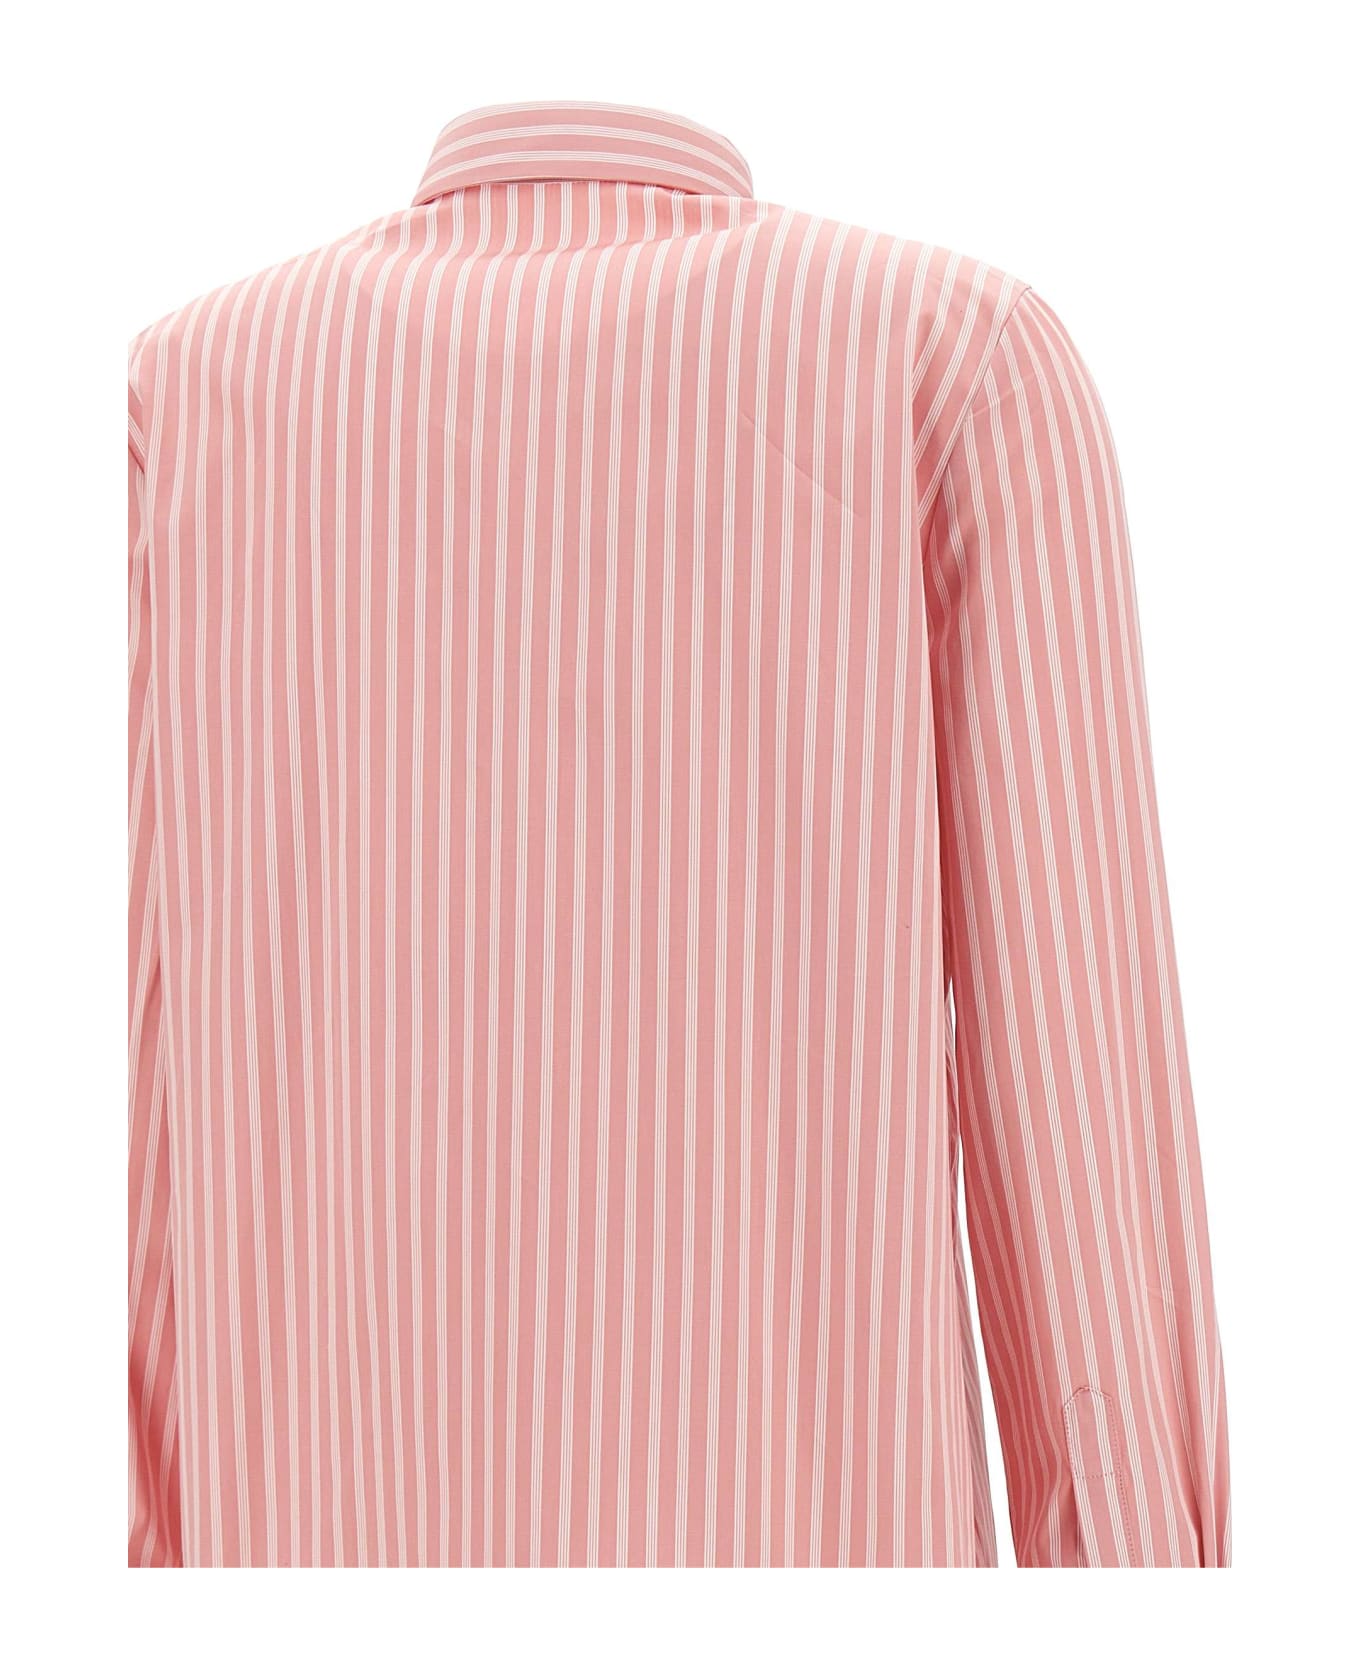 Etro Silk And Cotton Shirt - Pink